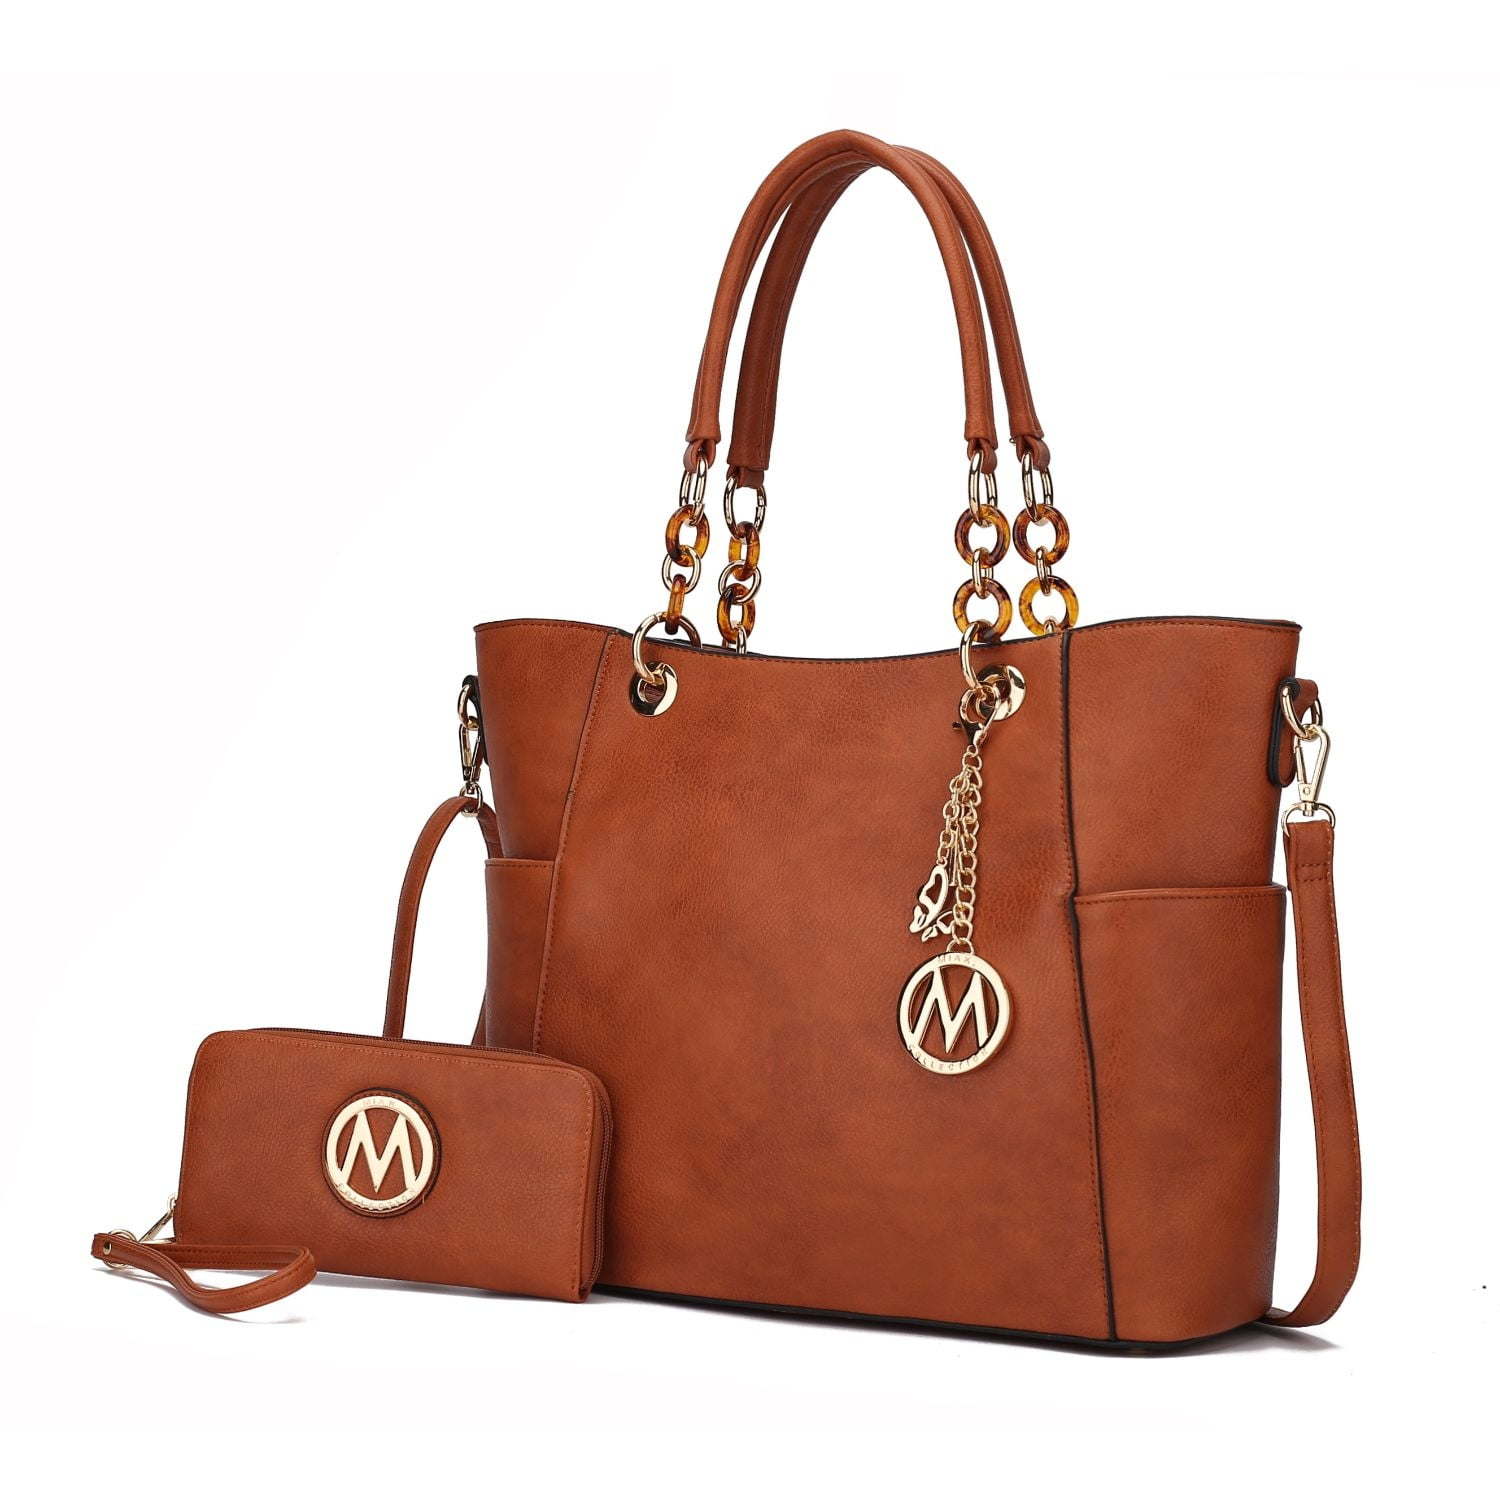 MKF Collection - Bonita Vegan Leather Tote Handbag & Wallet by Mia K - Black 3P's Inclusive Beauty